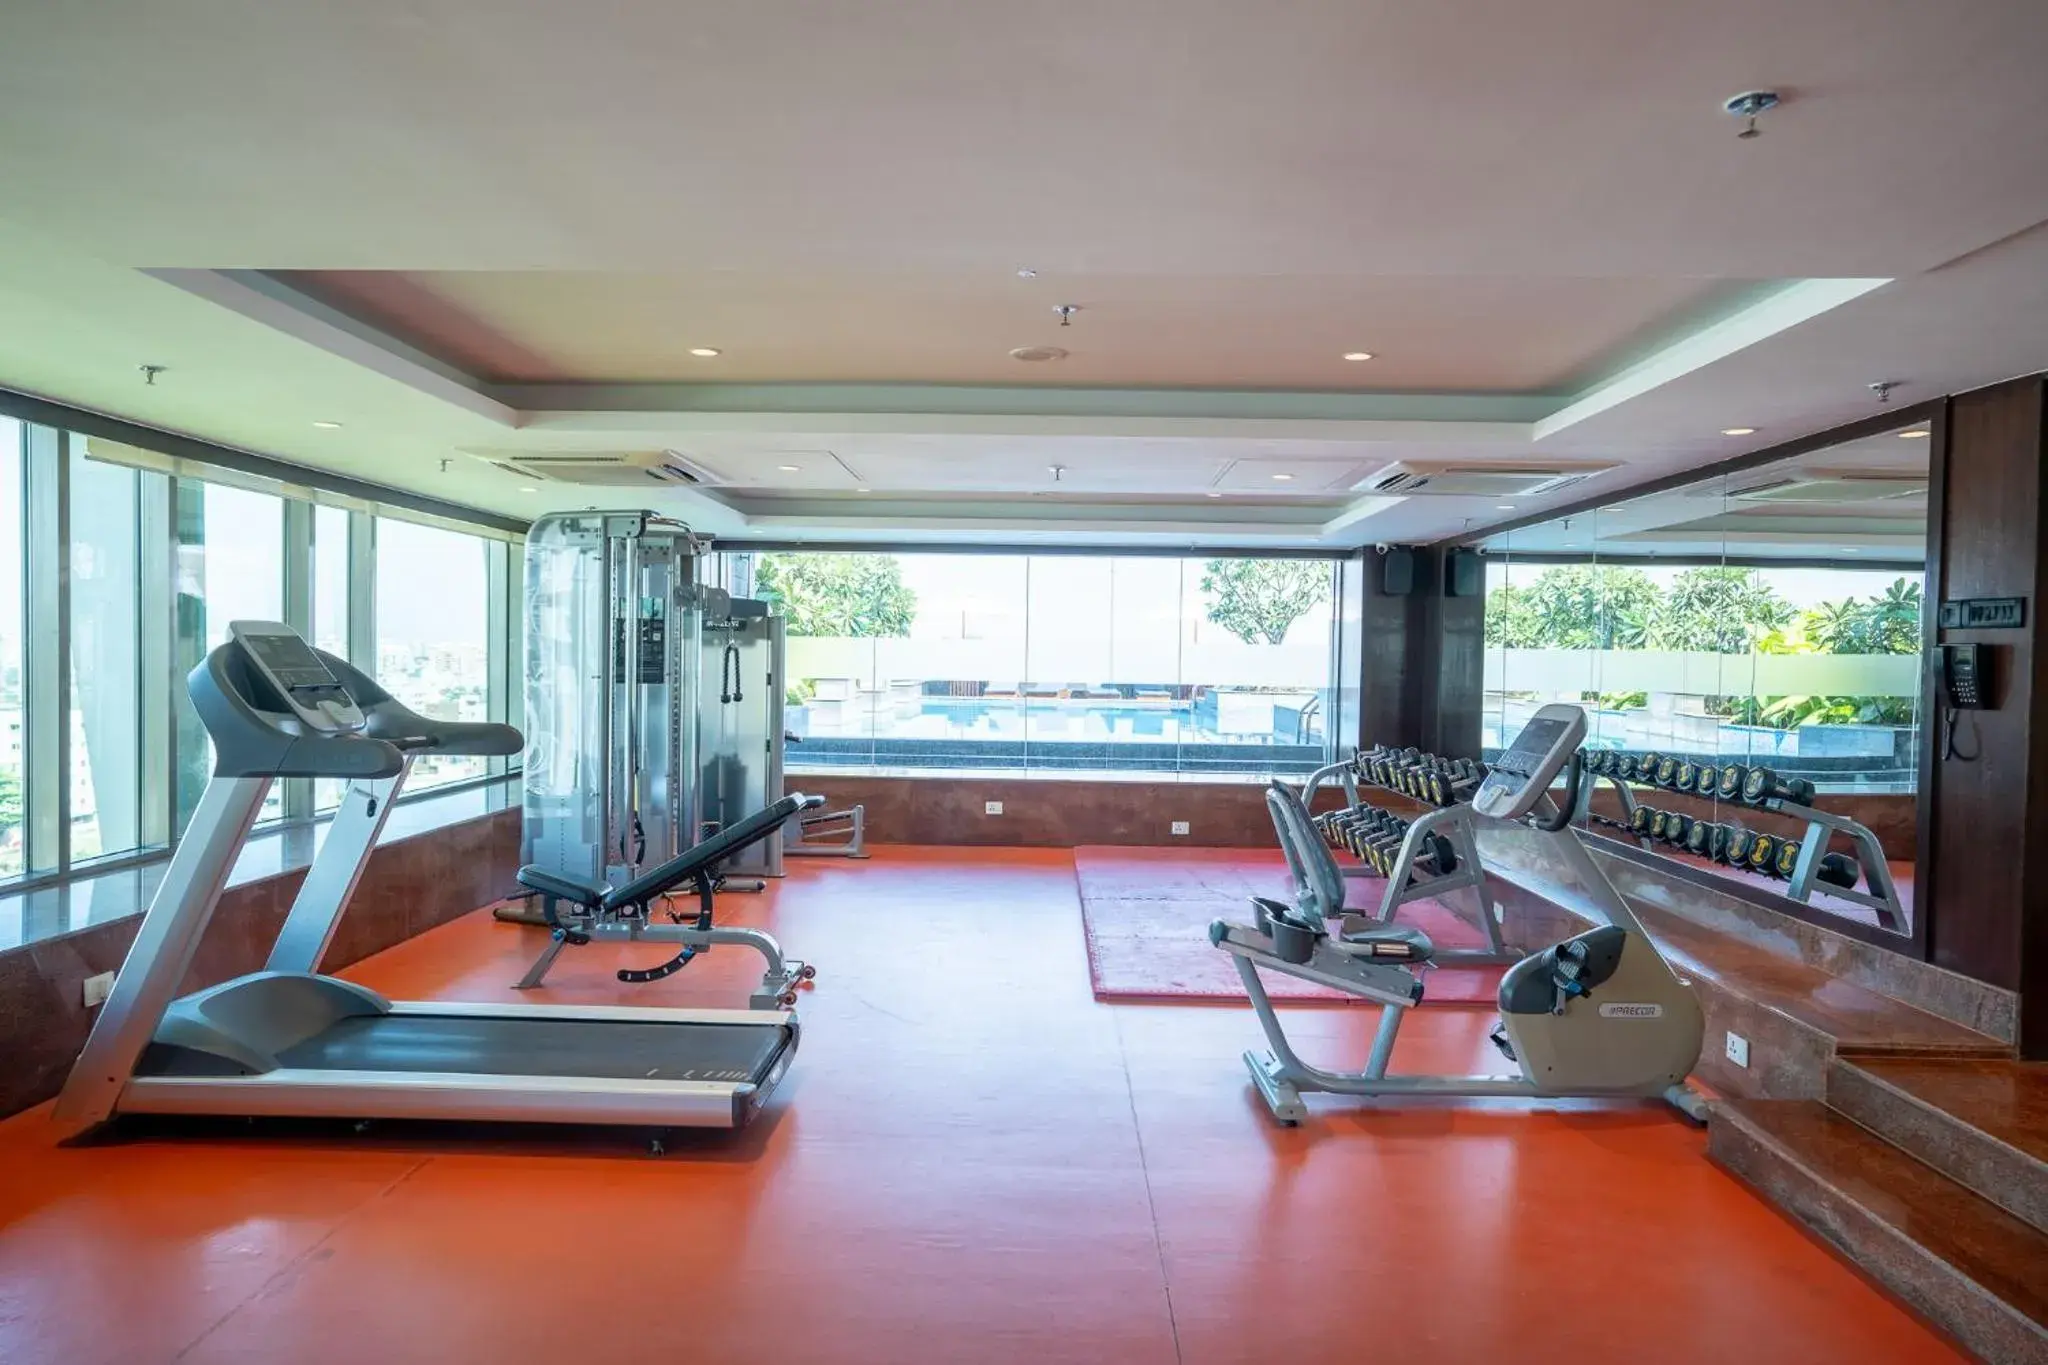 Fitness centre/facilities, Fitness Center/Facilities in Radisson Blu Pune Hinjawadi